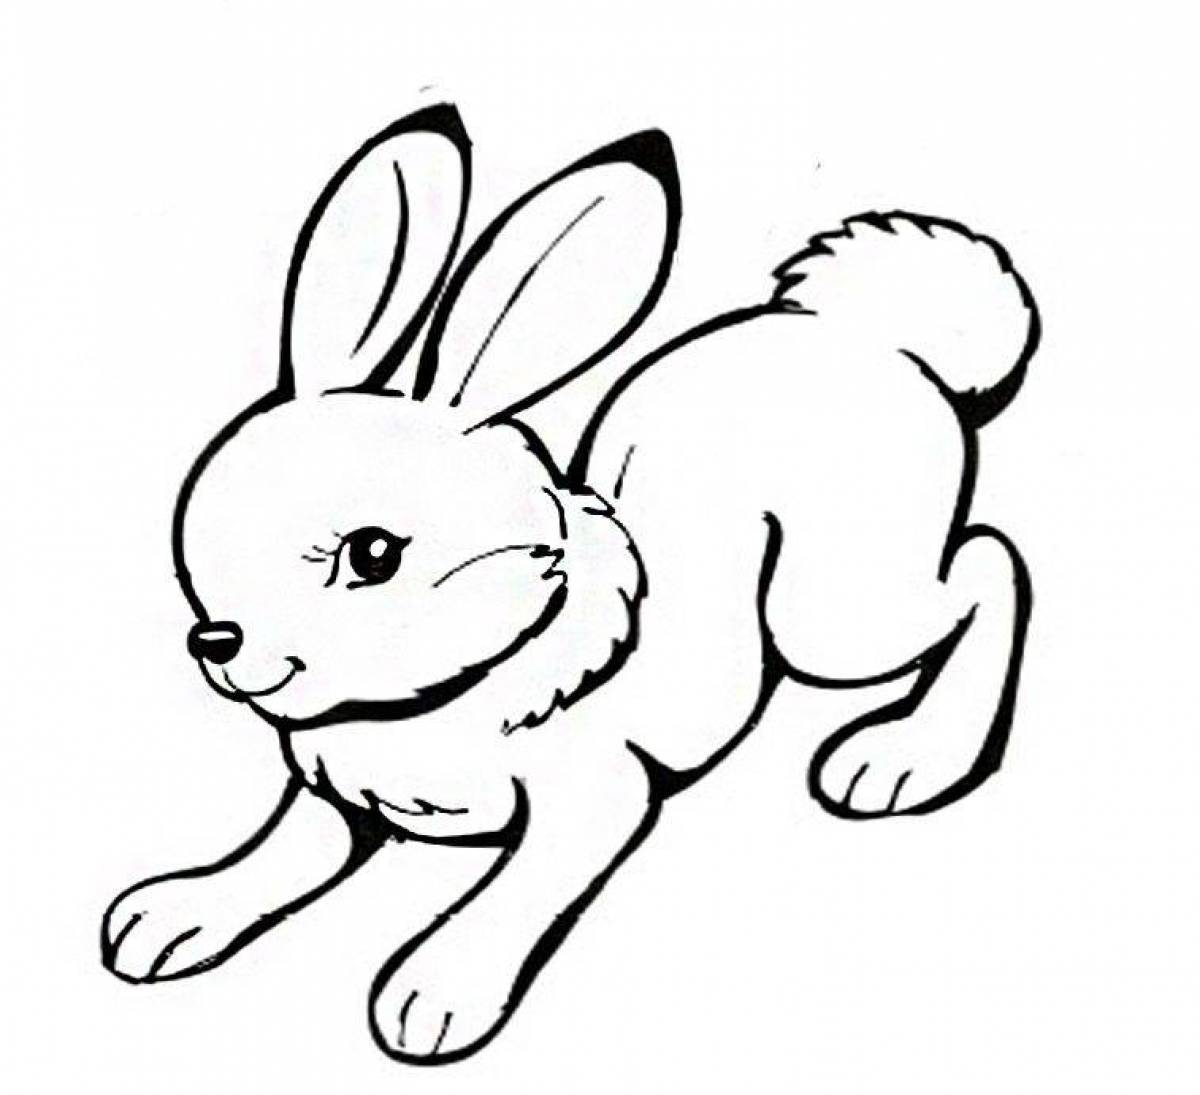 Раскраска милый заяц для детей